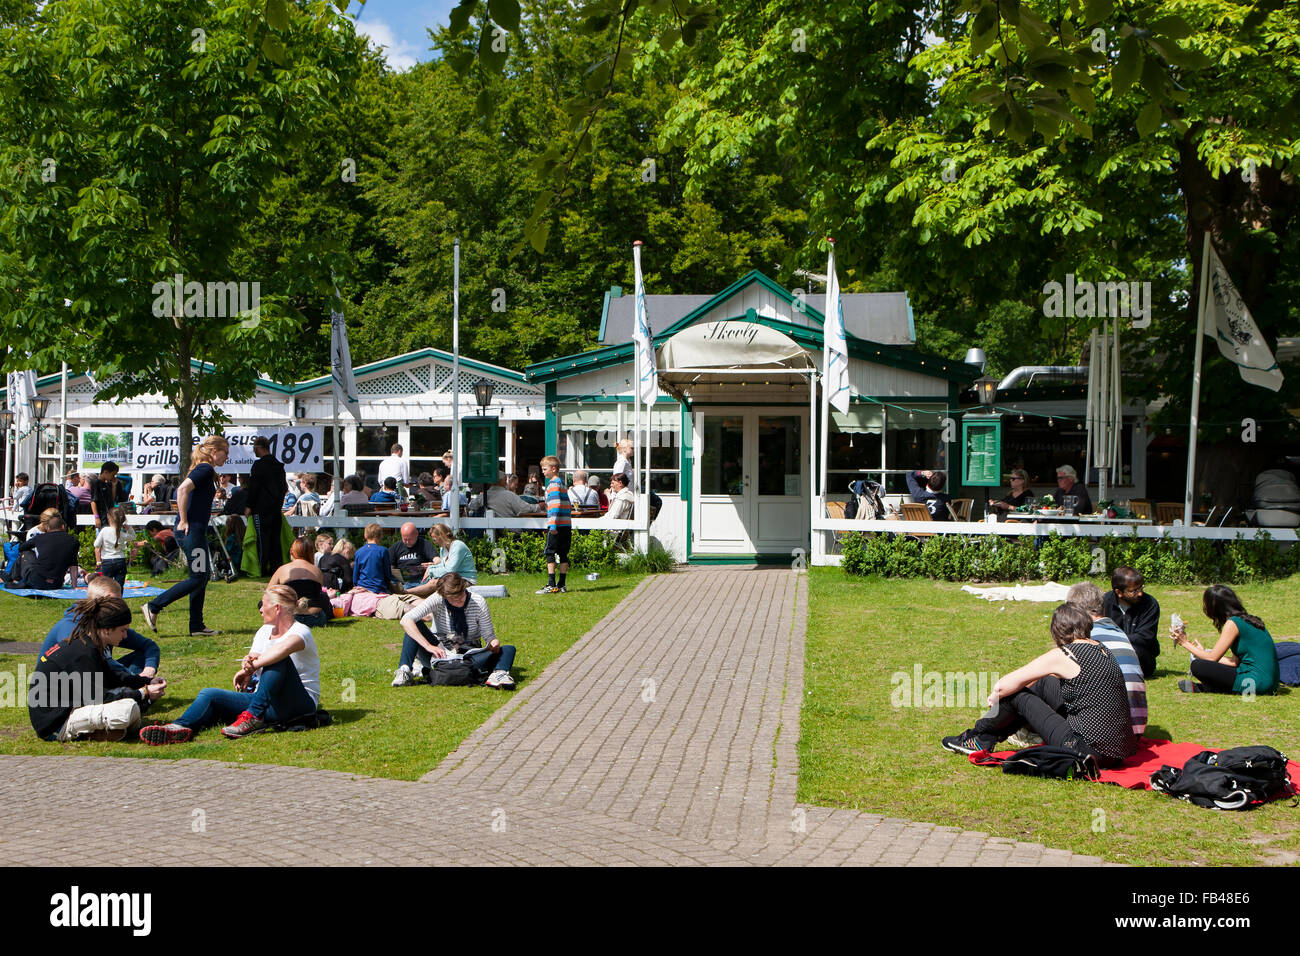 The relaxing lawn area at the amusement park Bakken, Klampenborg, Copenhagen, Denmark Stock Photo